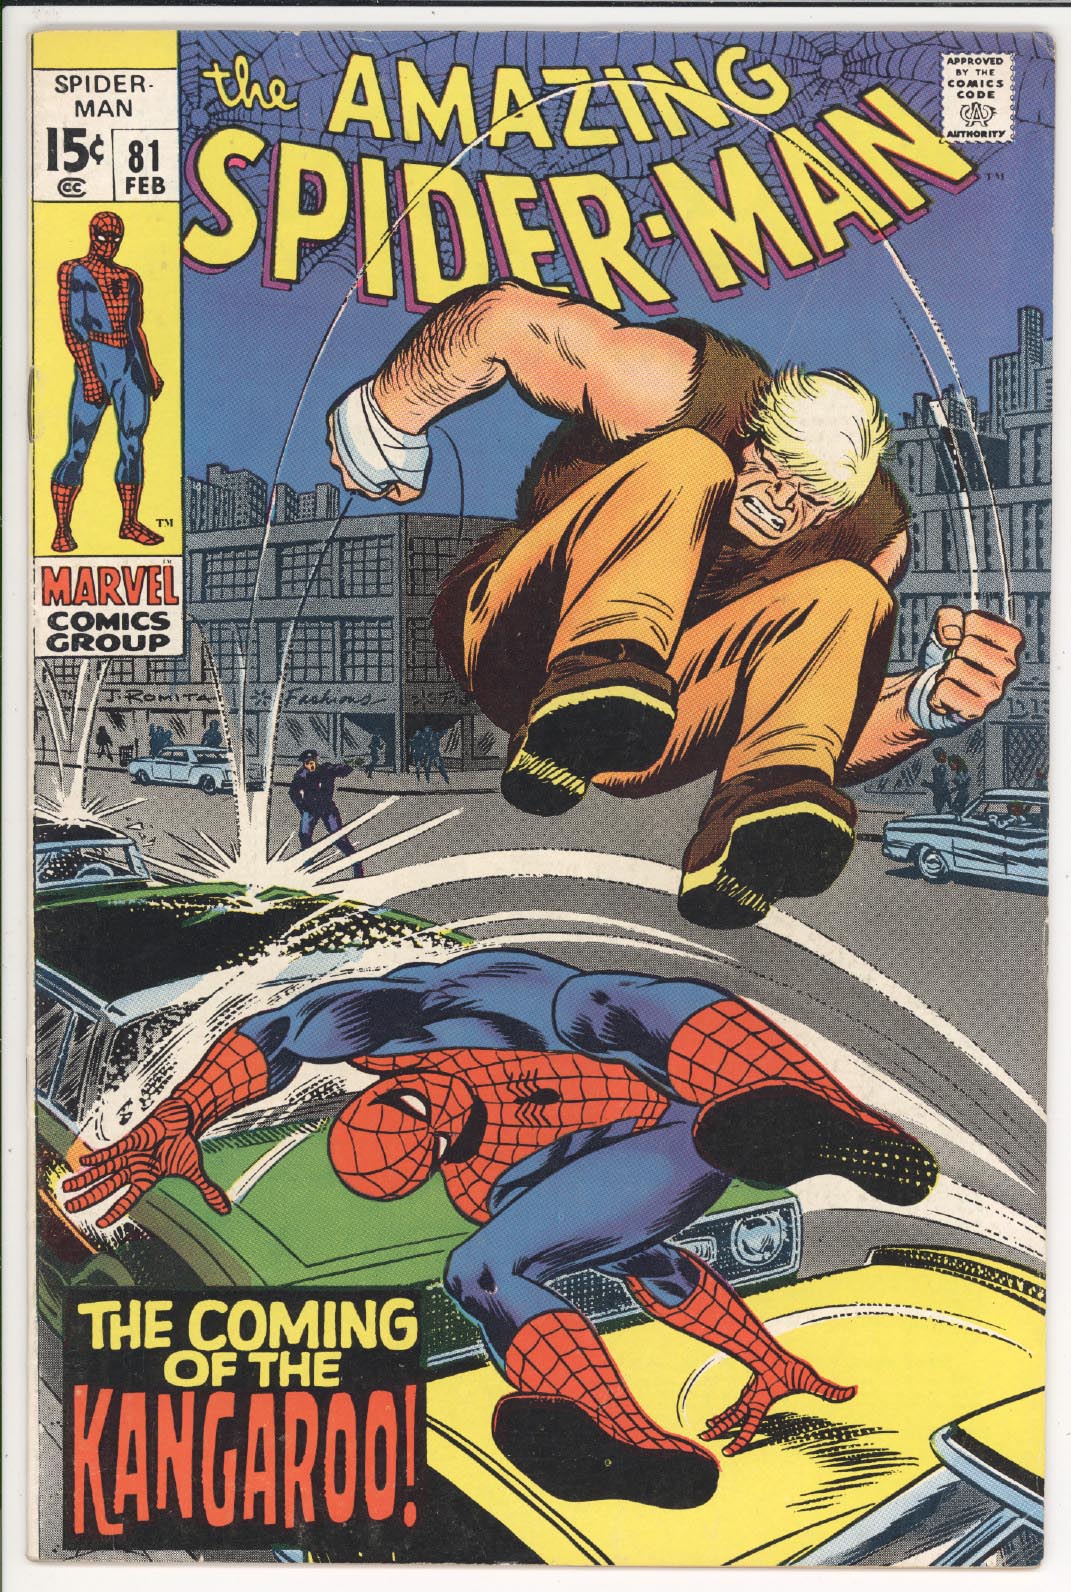 Amazing Spider-Man #81 front